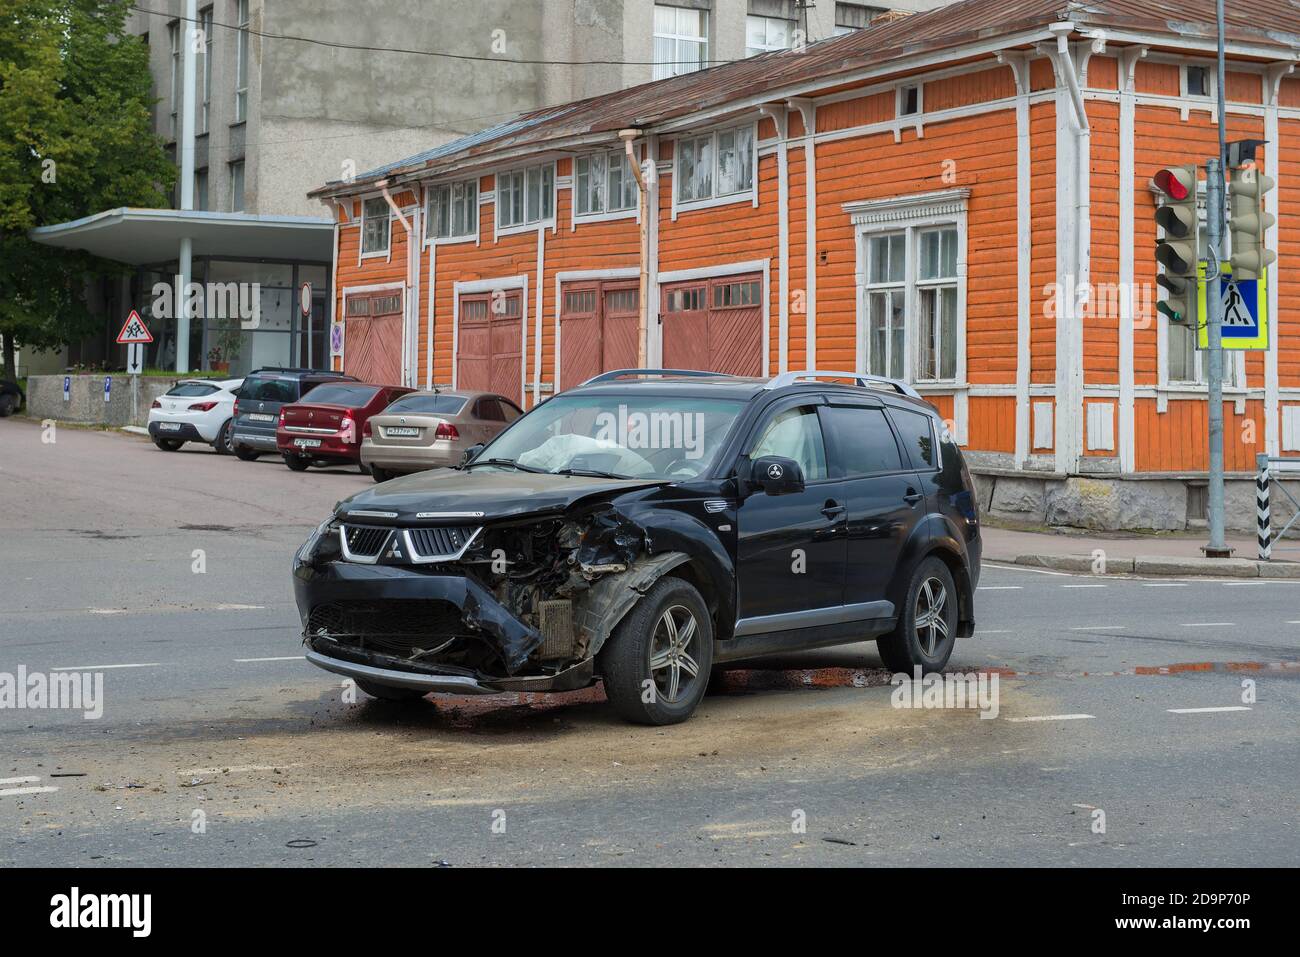 SORTAVALA, RUSSIA - AUGUST 15, 2020: Broken Mitsubishi Outlander car on city street Stock Photo